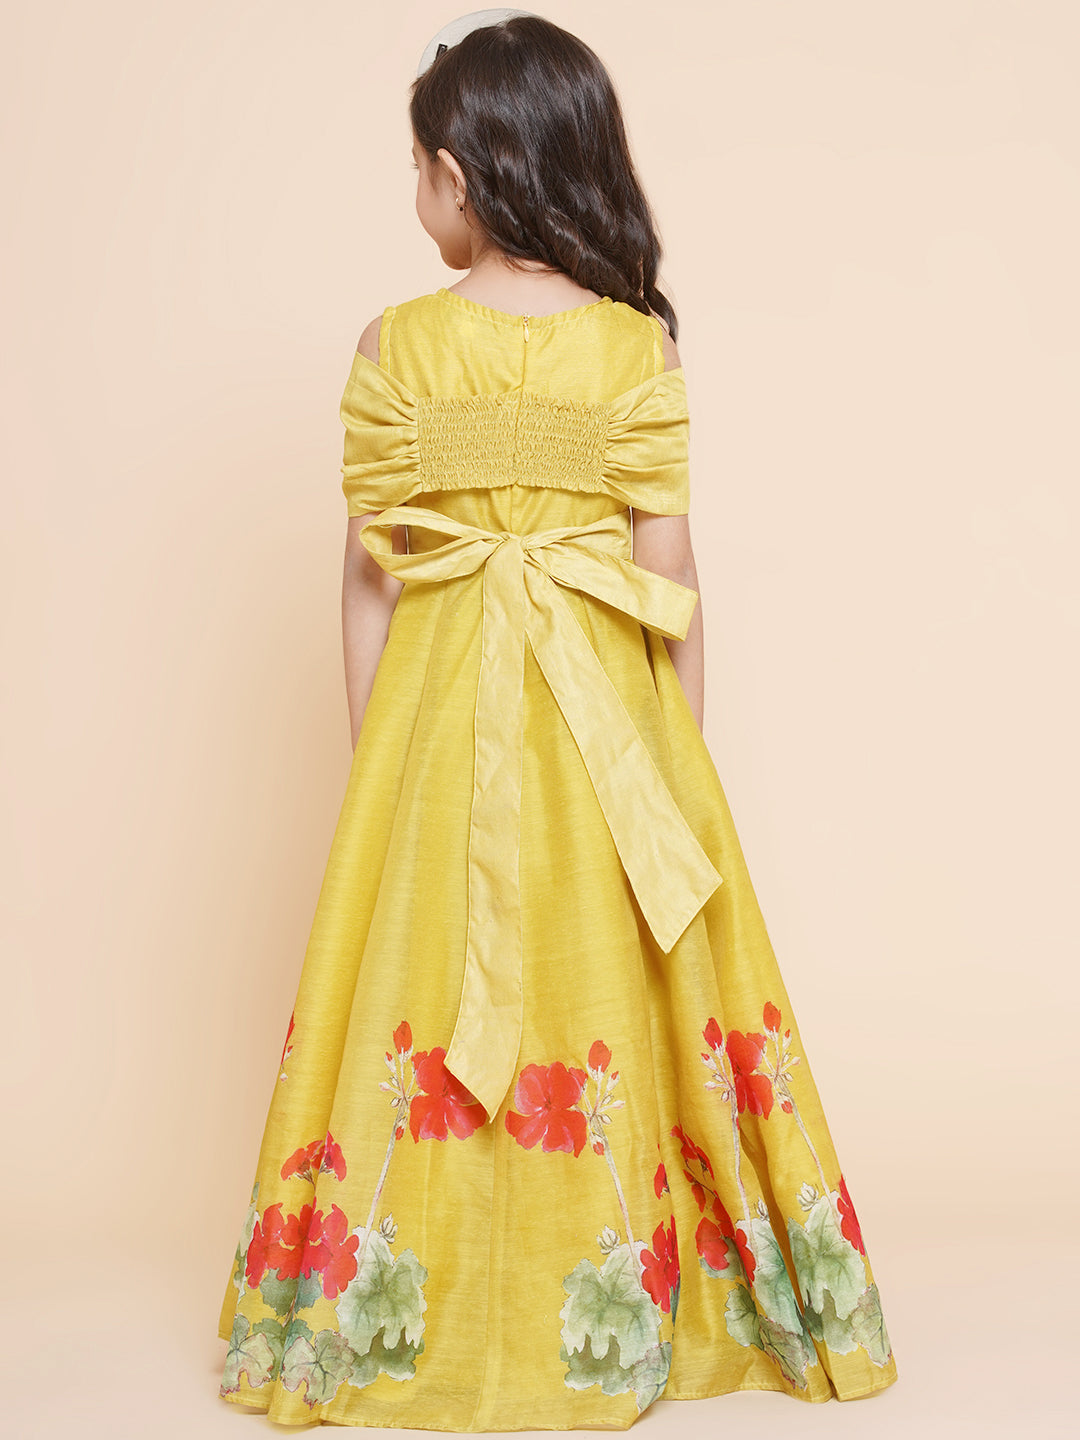 Bitiya By Bhama Girls Yellow Floral Printed Dress